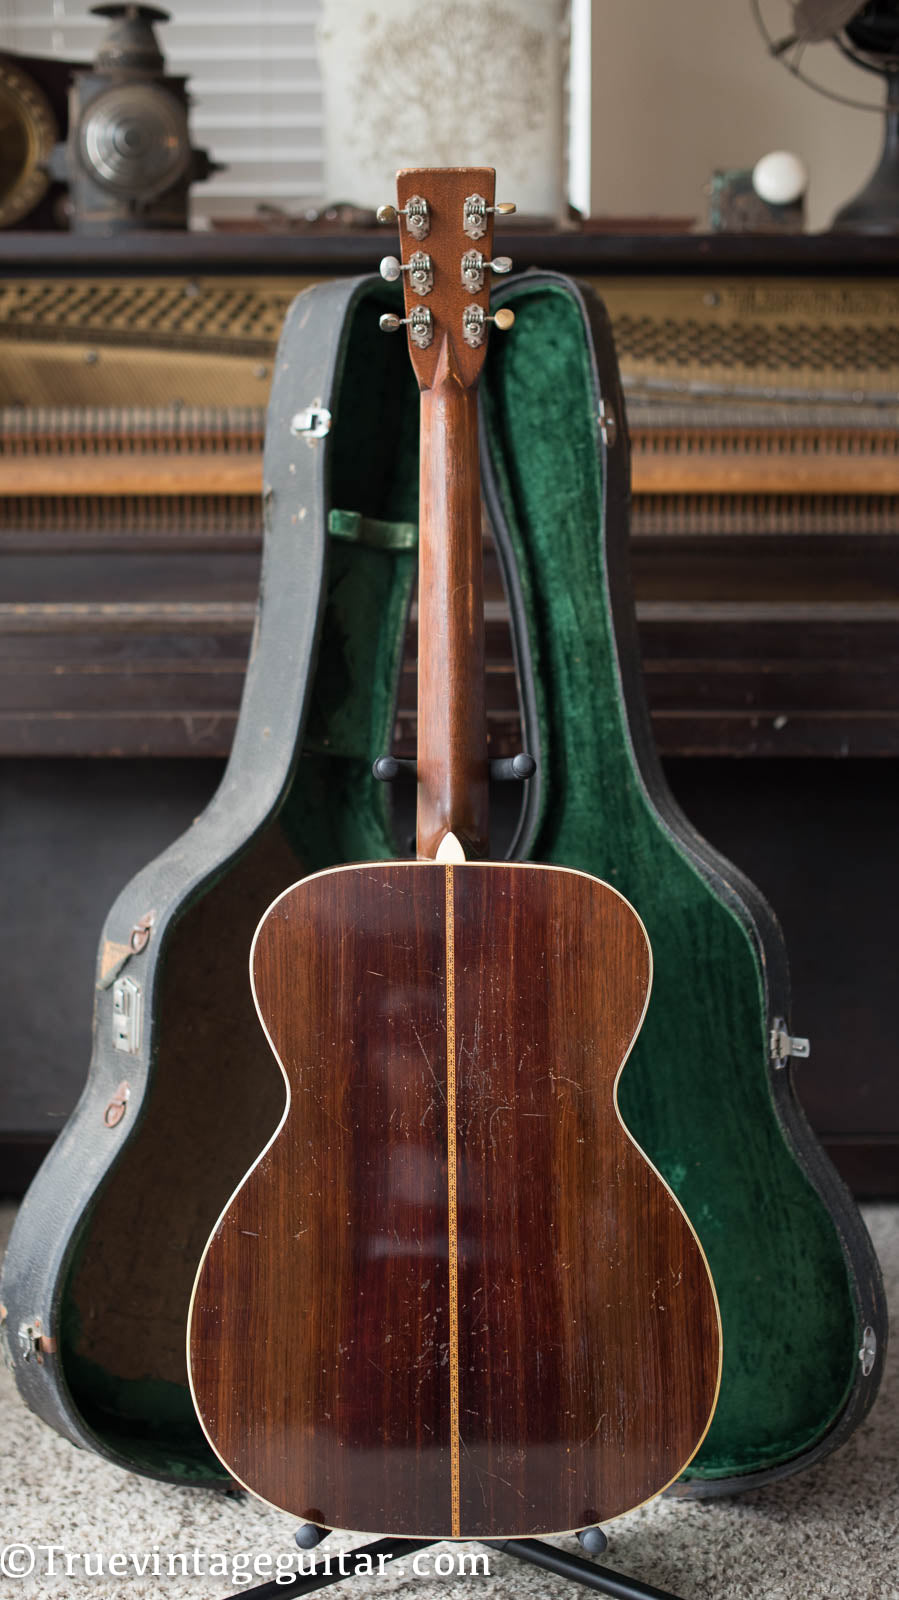 Vintage 1941 Martin 000-42 acoustic guitar